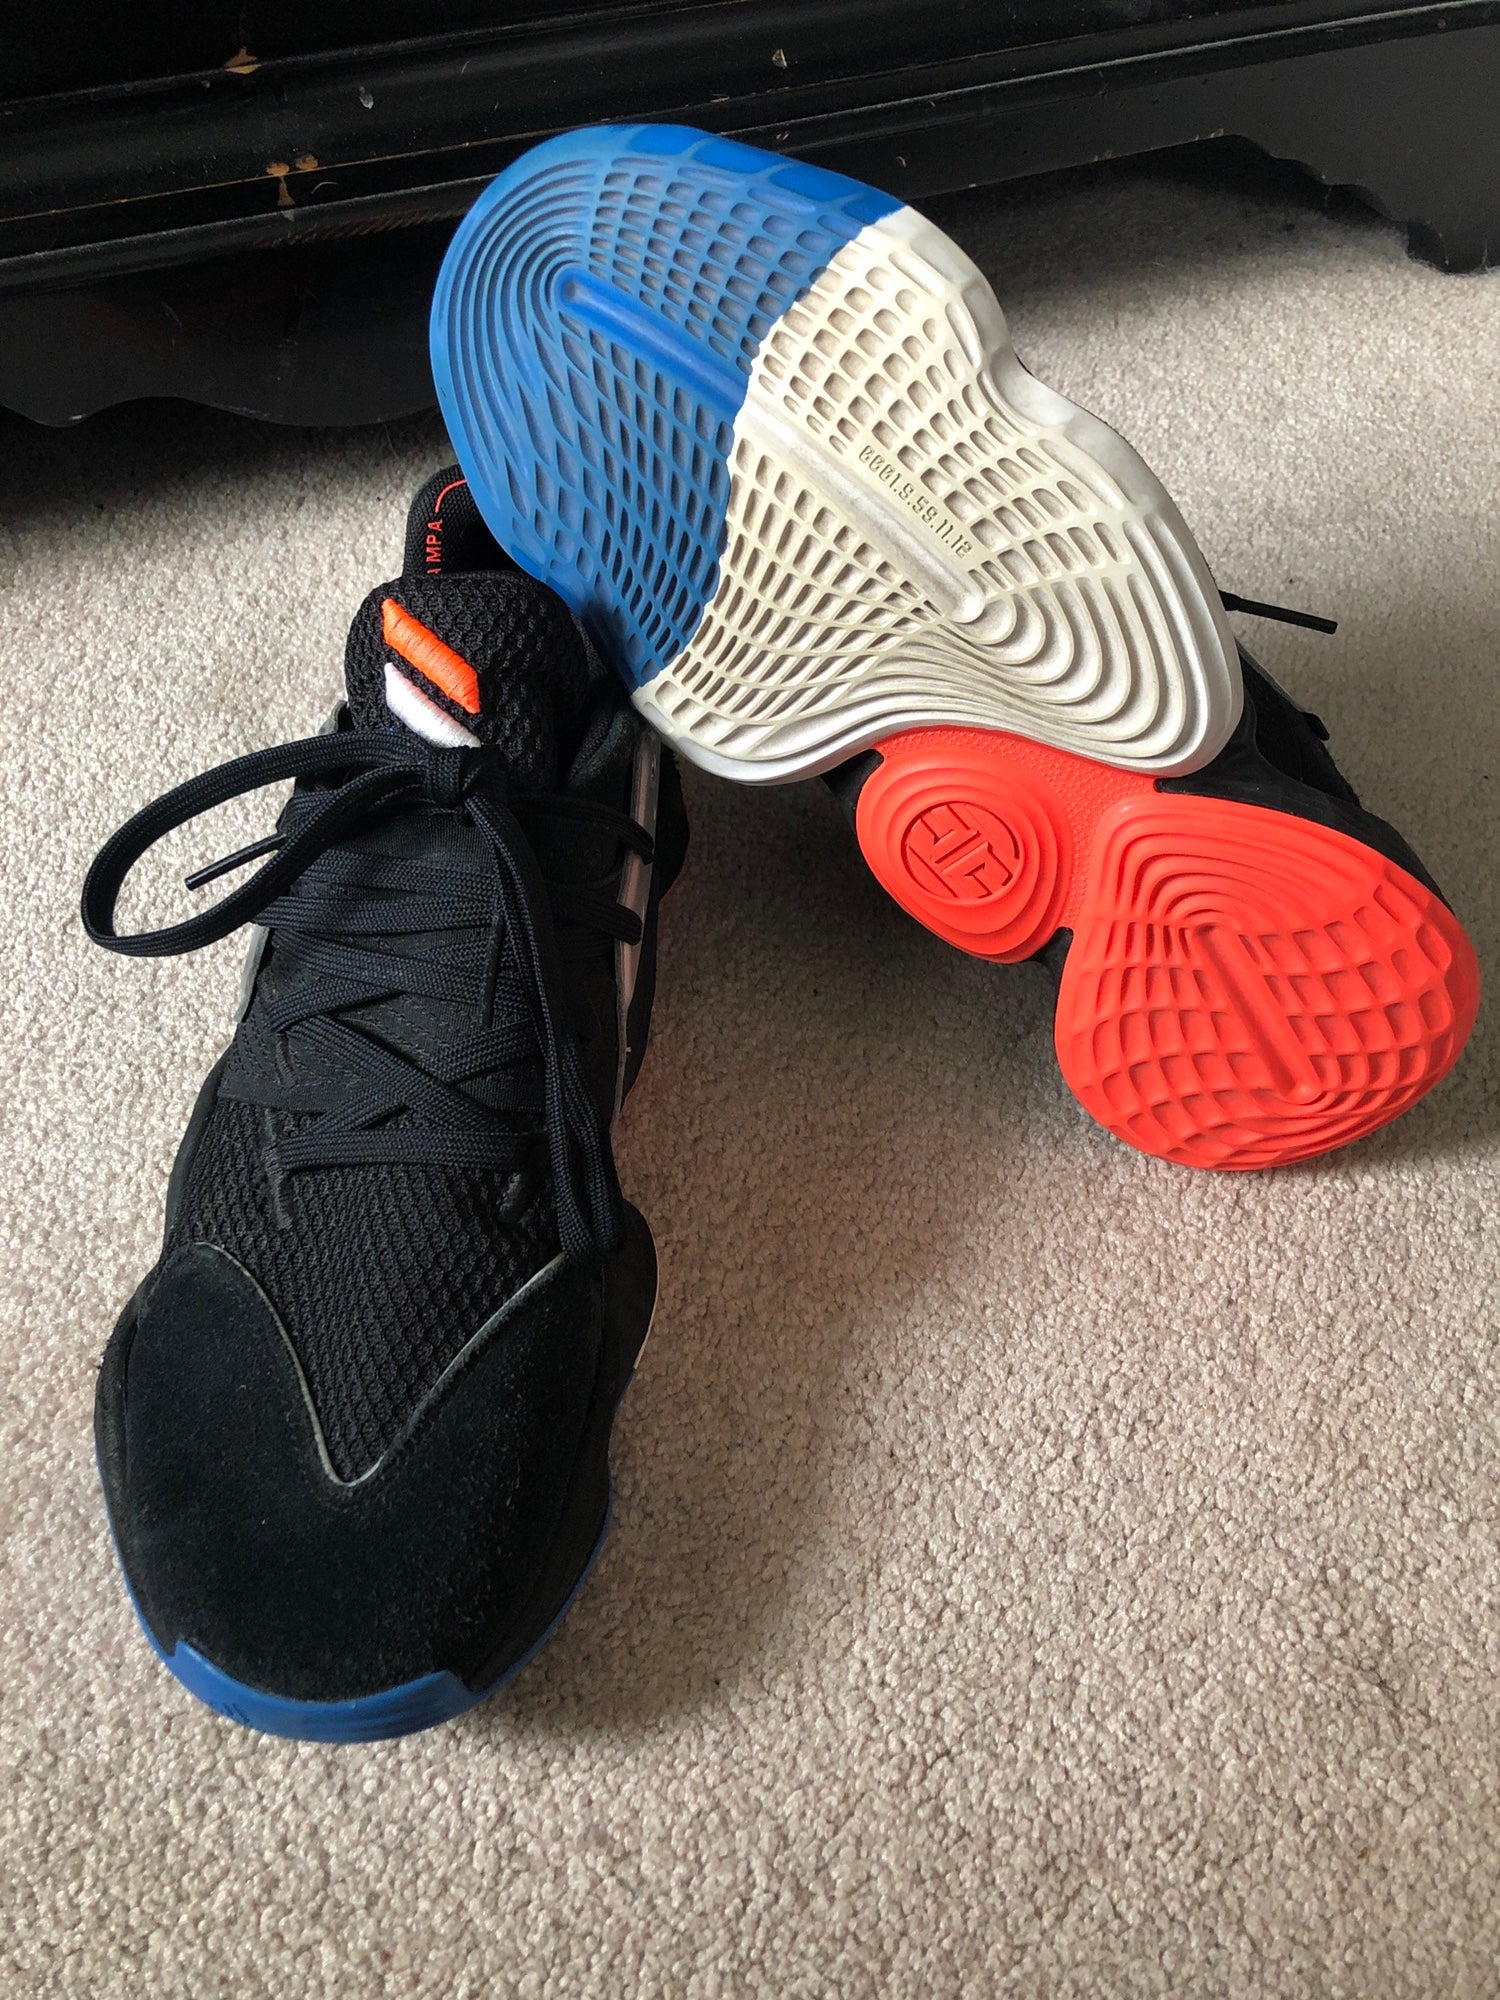 Men's Adidas Harden Vol 4 Basketball Shoes Size 9.5 (Women's 10.5 